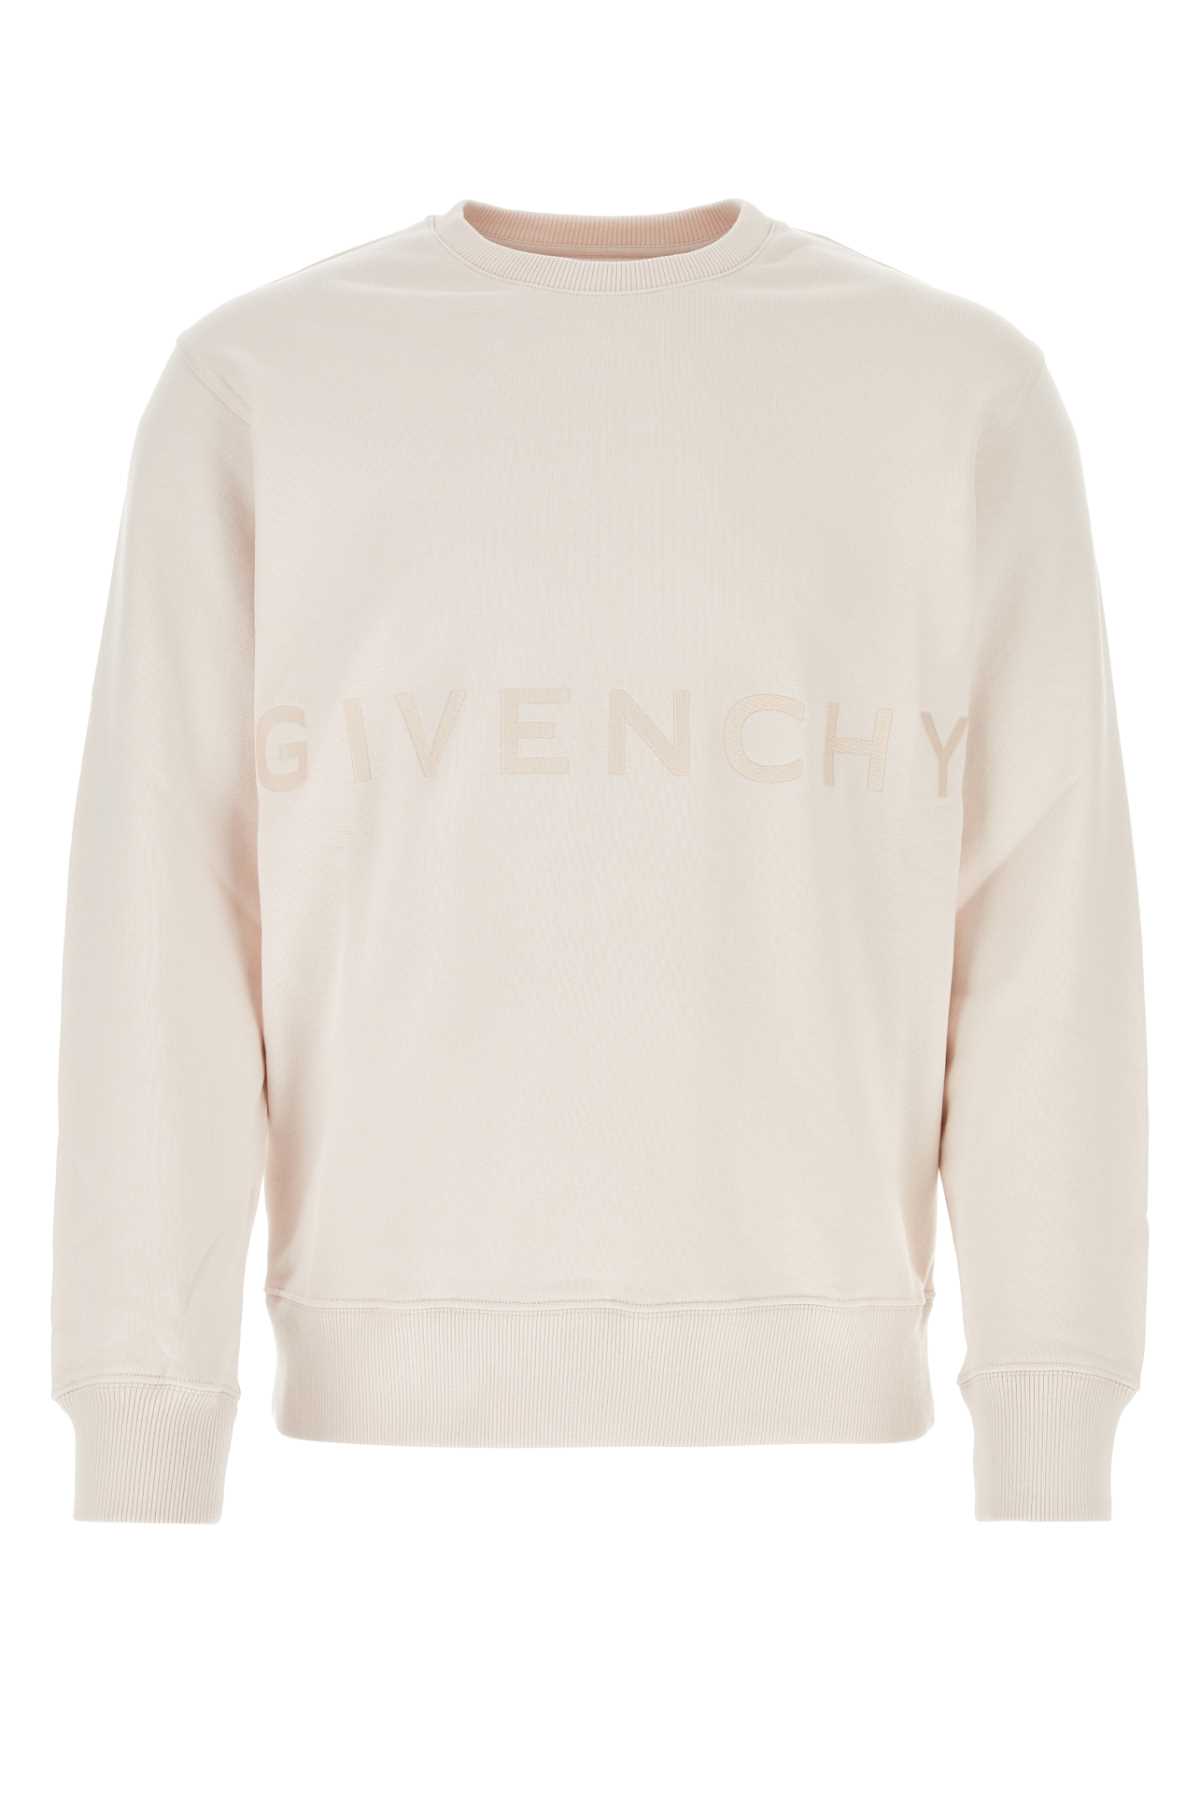 Givenchy Light Pink Cotton Sweatshirt